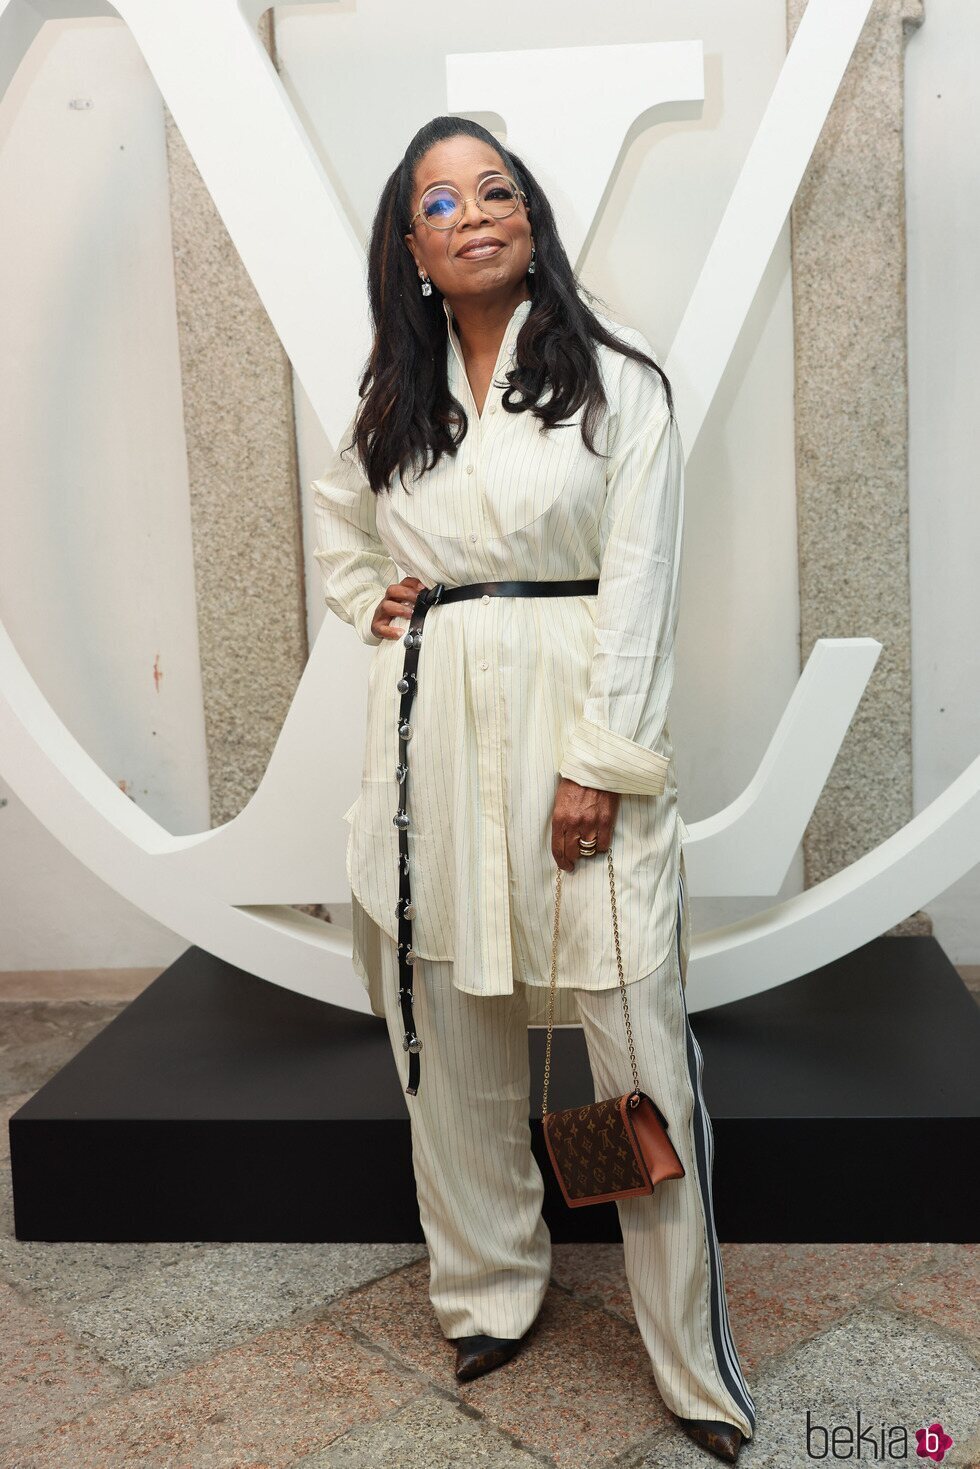 Oprah Winfrey en el desfile de Louis Vuitton en Isola Bella